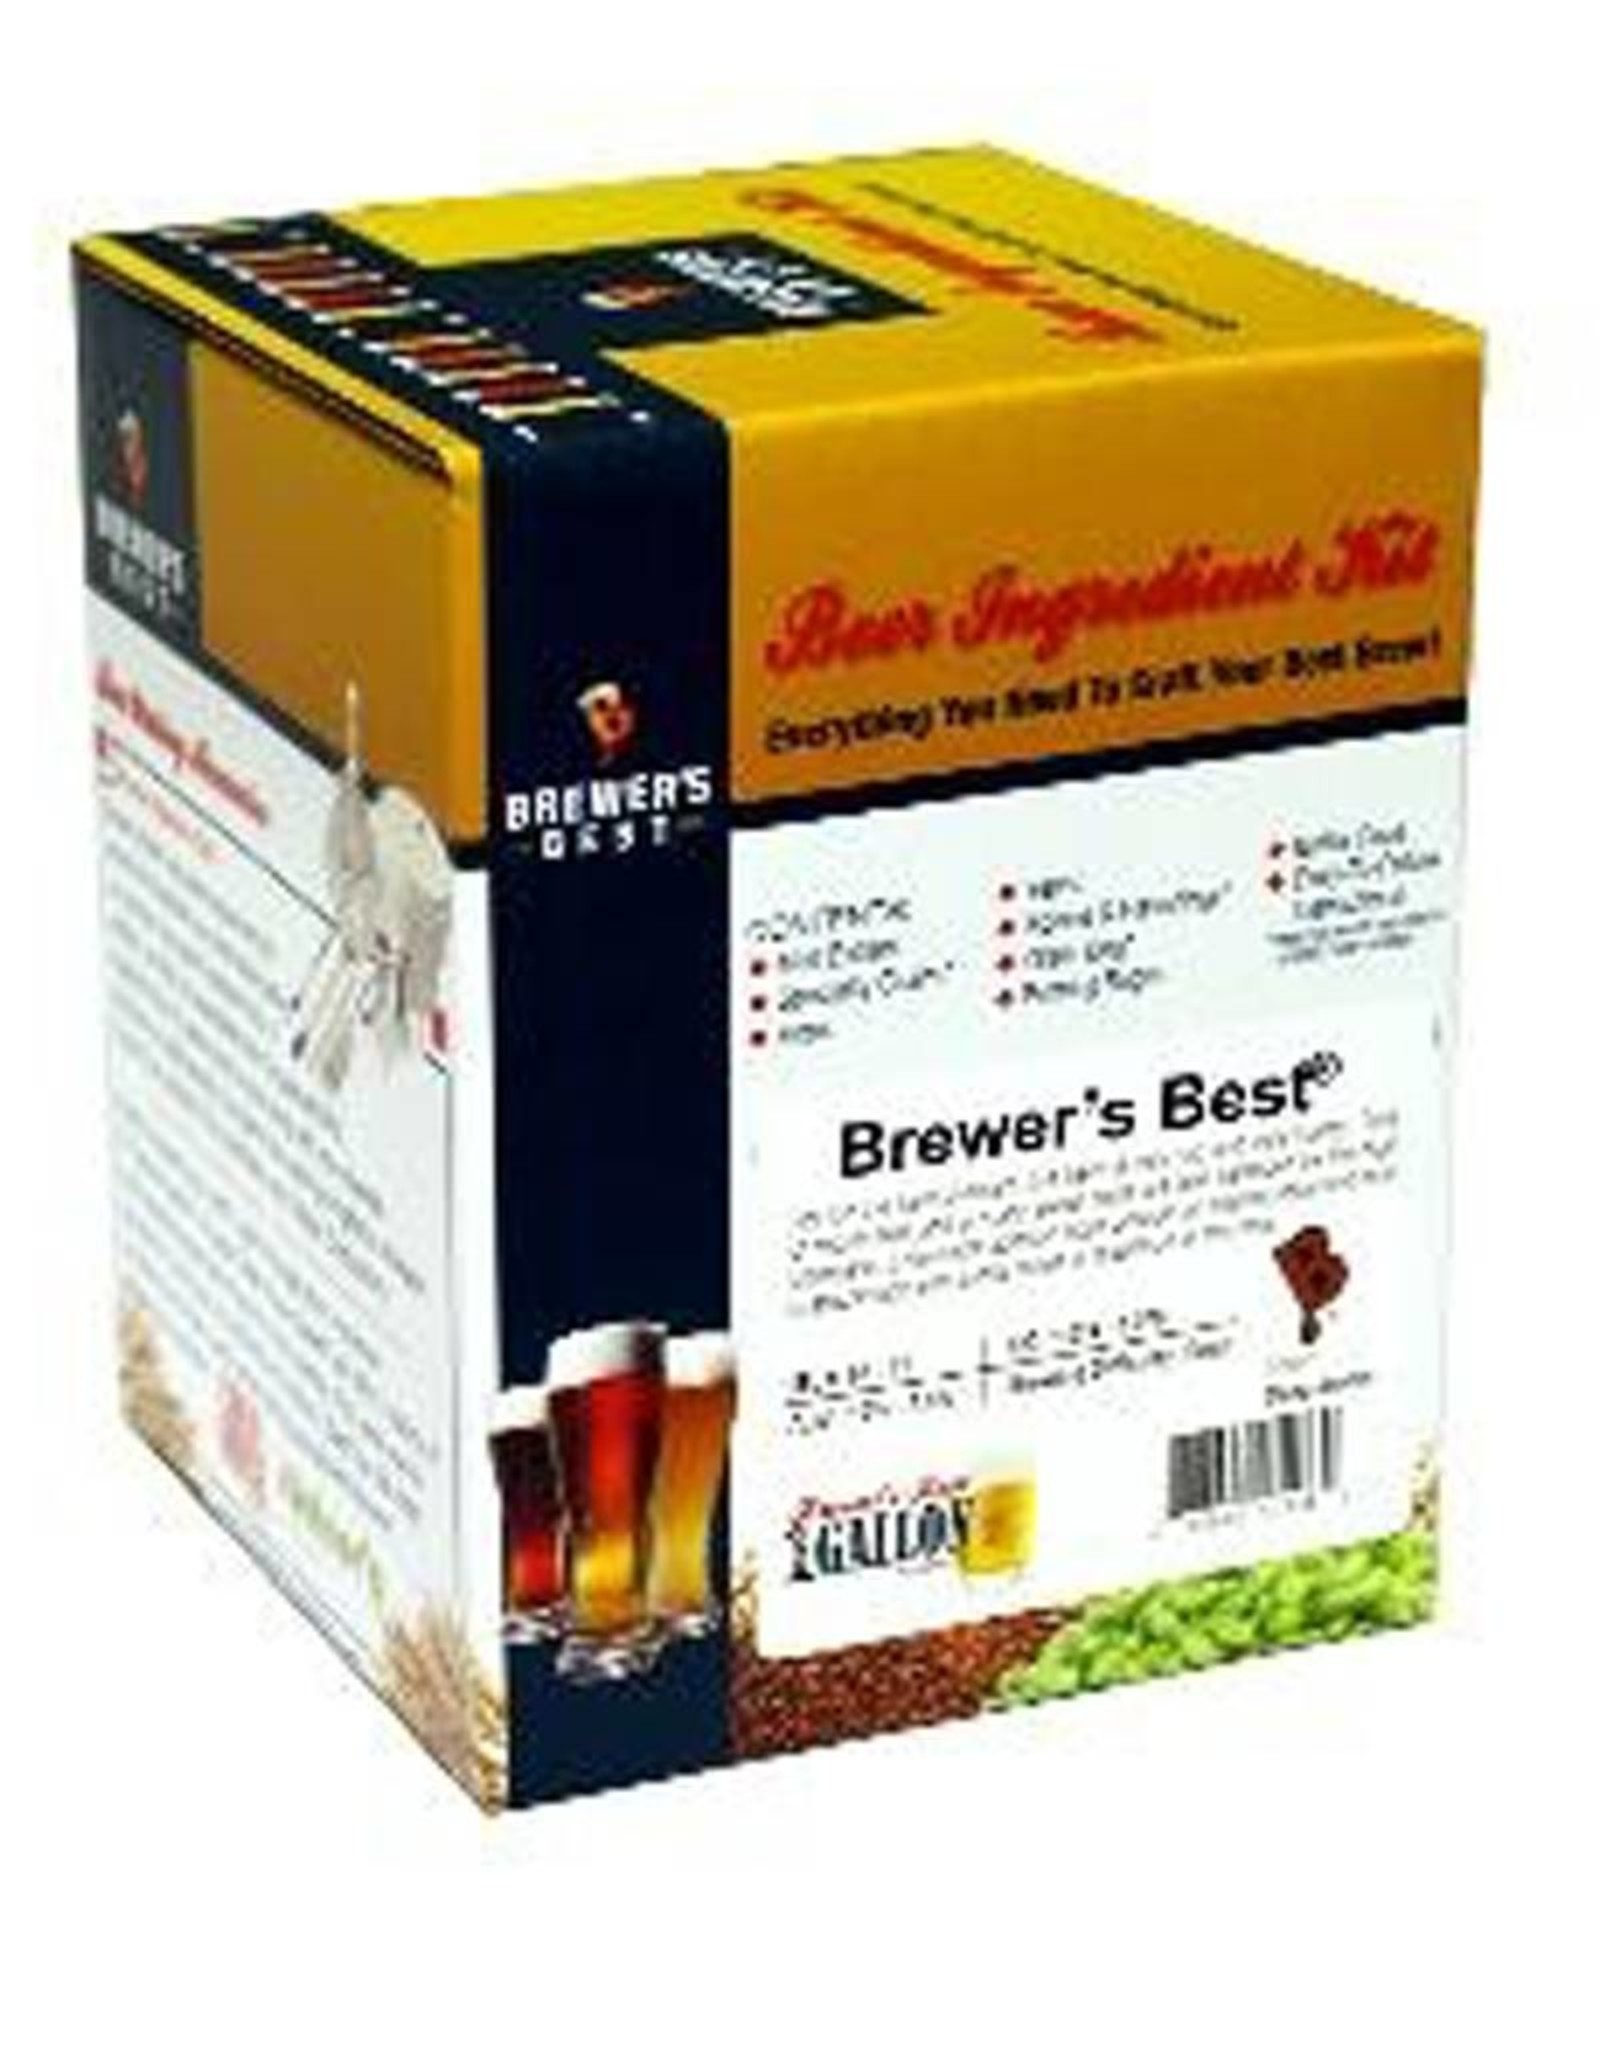 Brewers Best Salted Caramel Porter ingredient kit